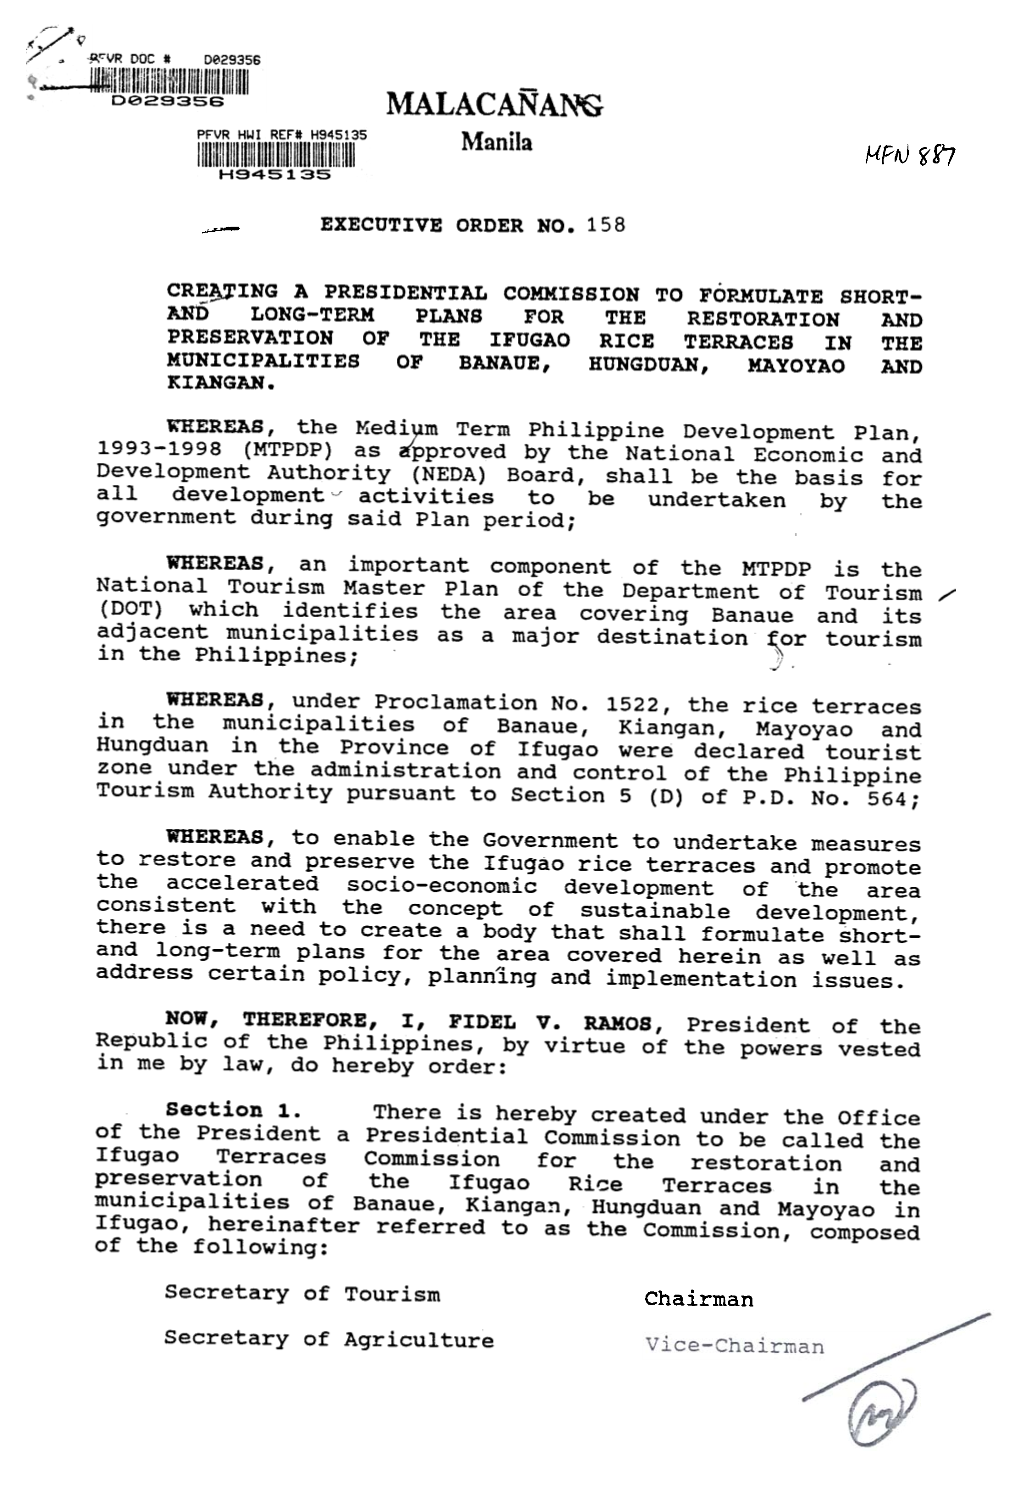 Executive Order No. 158, February 18, 1994